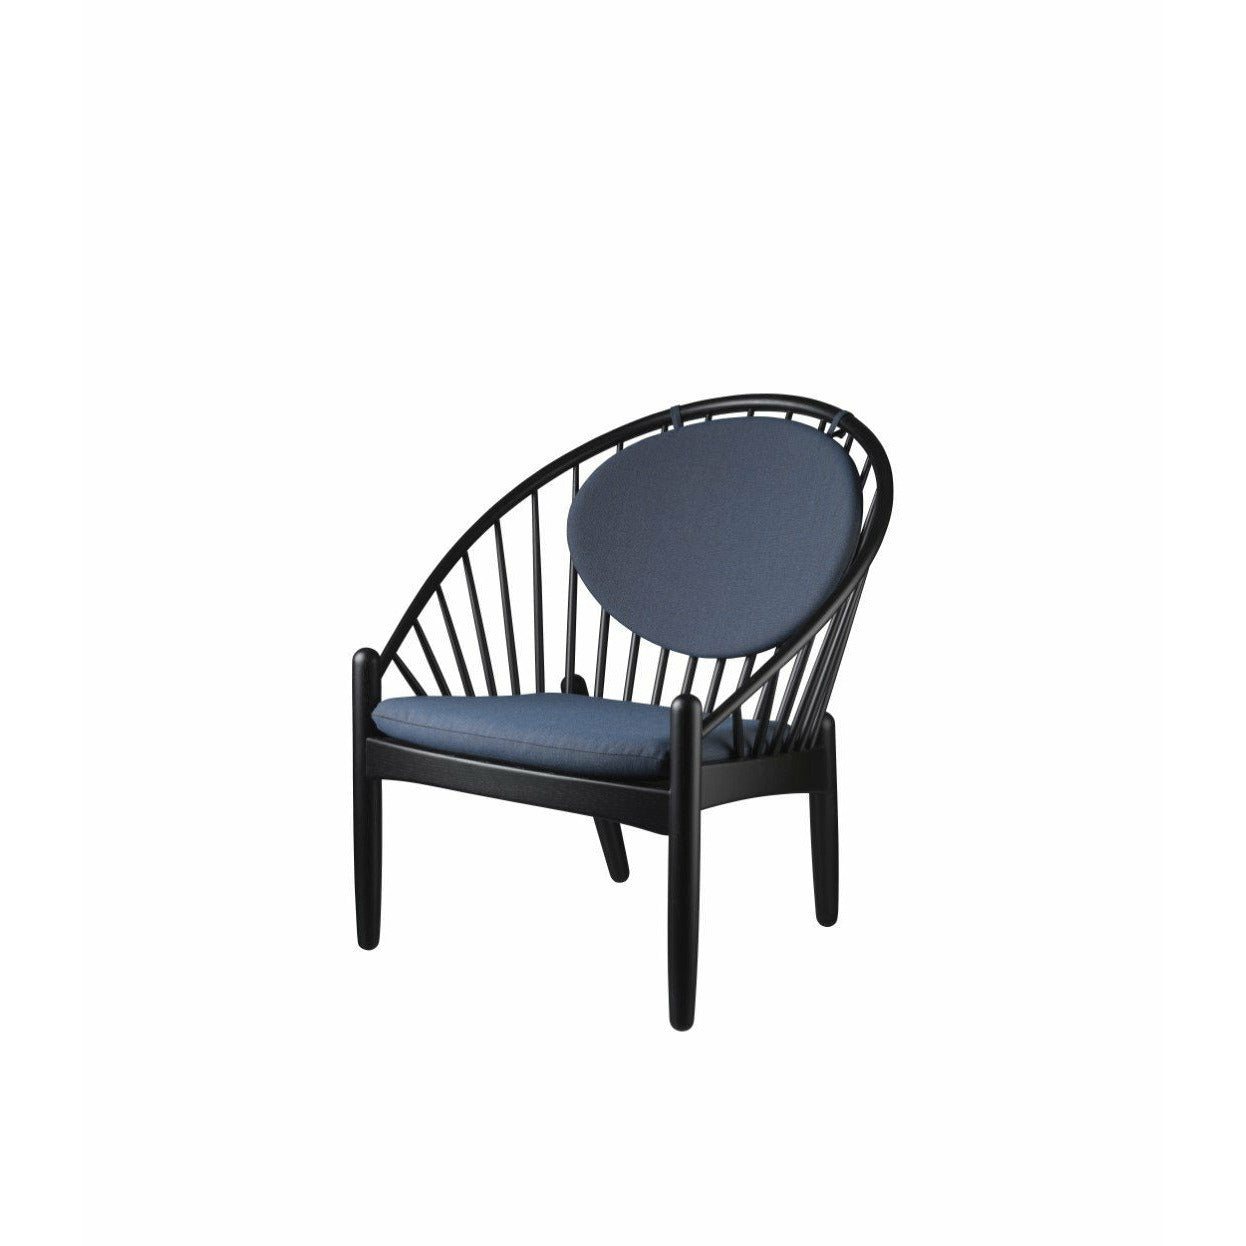 Fdb Møbler Seat Cushion For J166 Jørna Armchair, Crisp Dark Blue